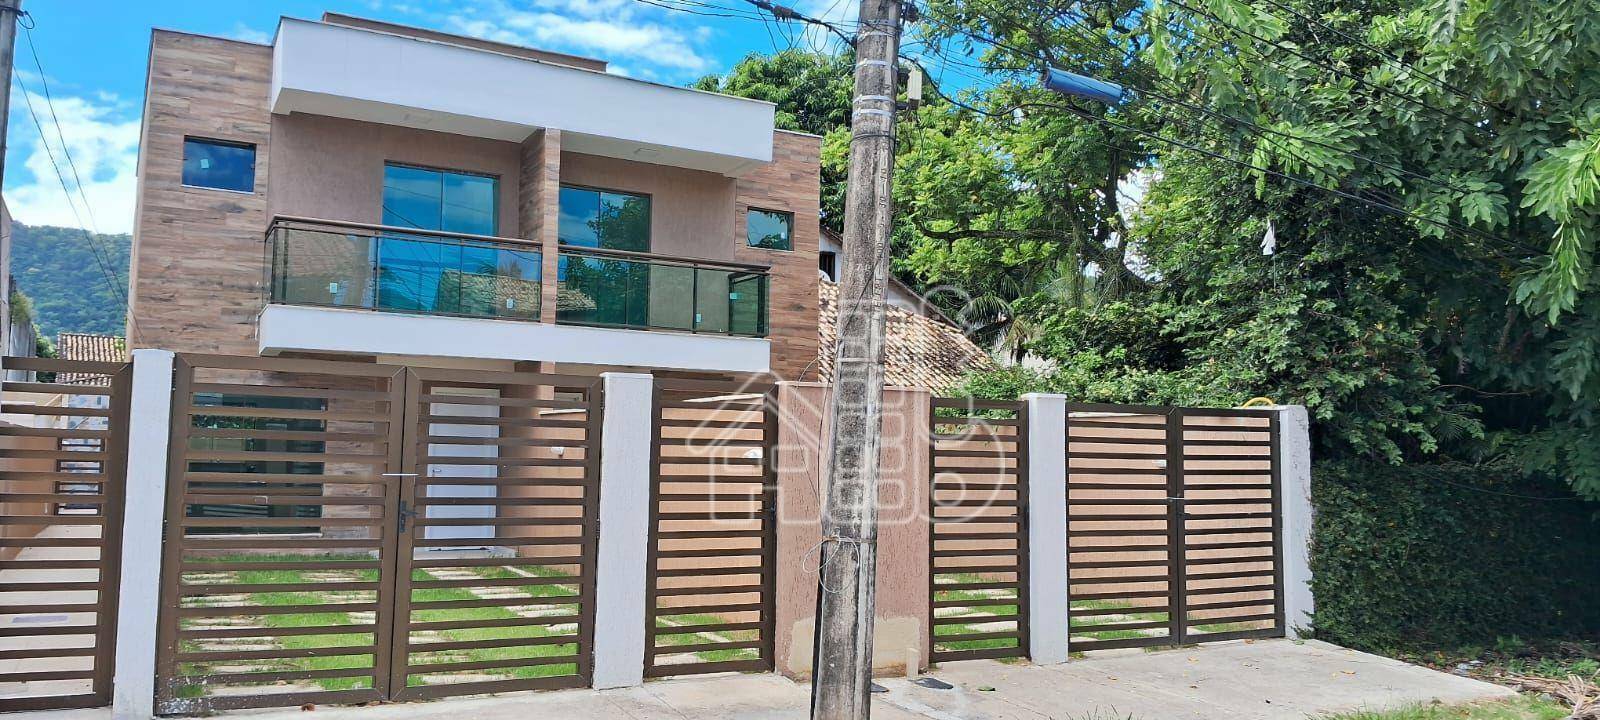 Casa à venda, 100 m² por R$ 545.000,99 - Itaipu - Niterói/RJ